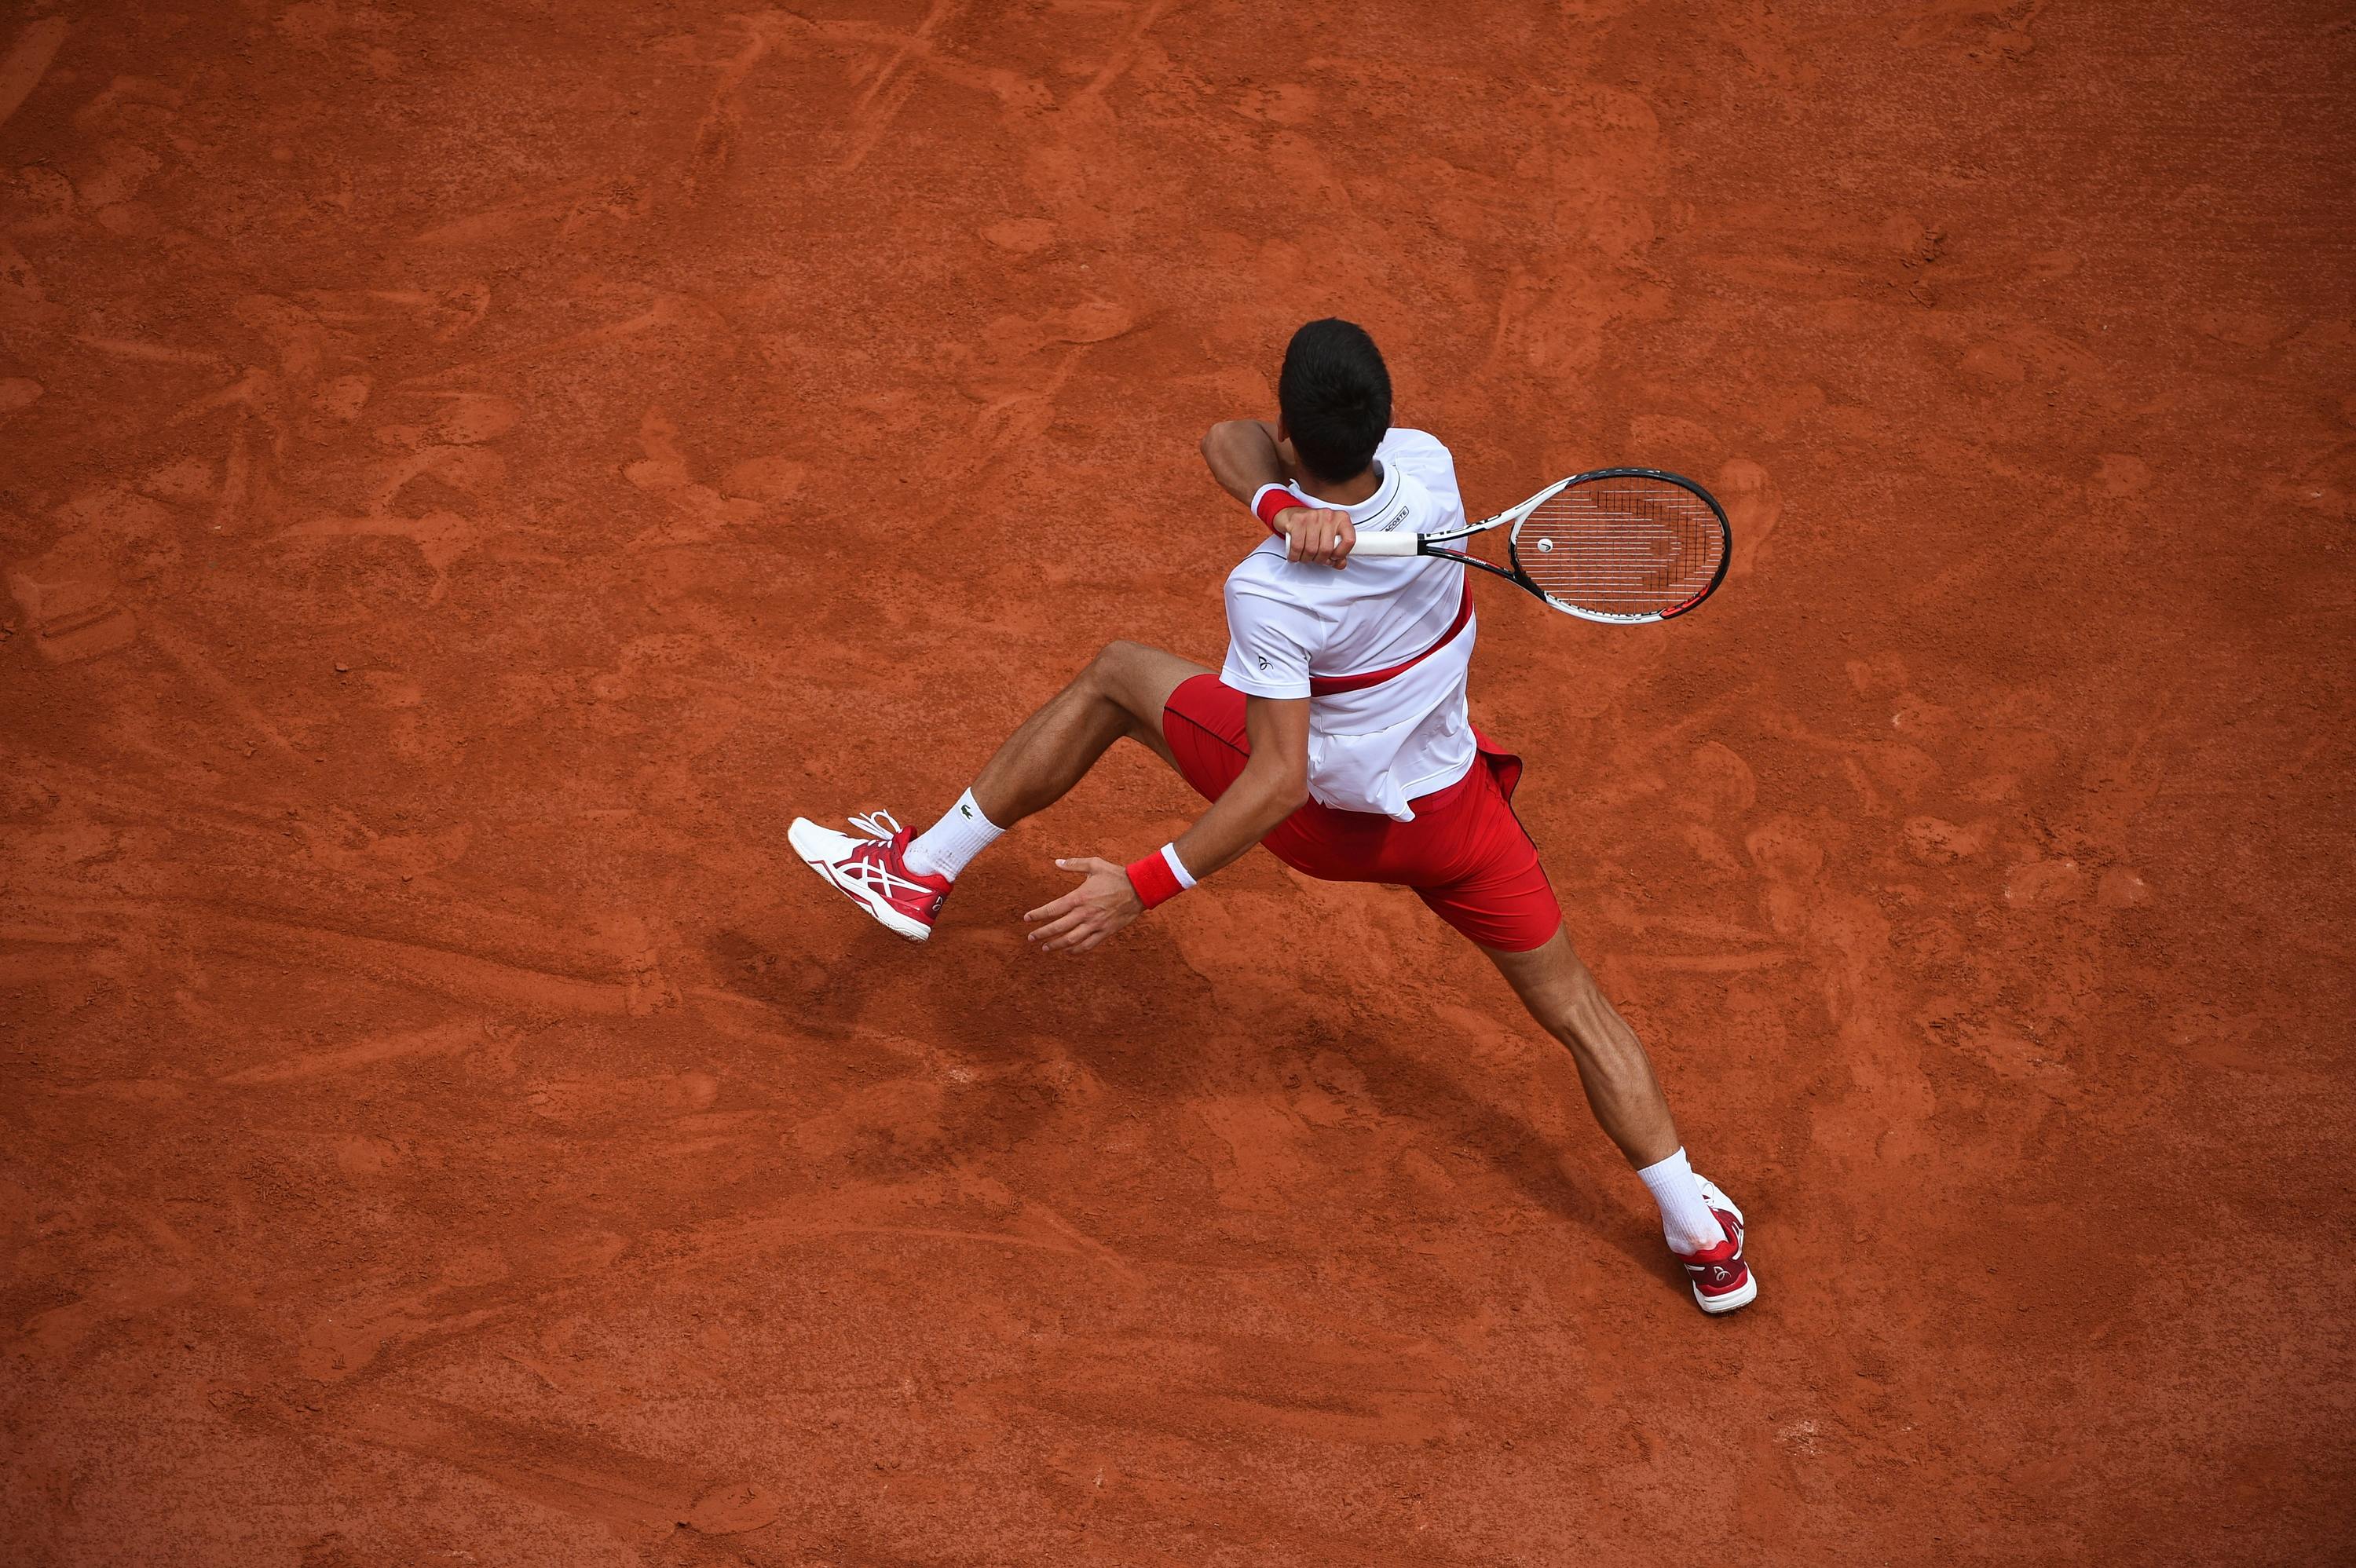 Dislocated Novak Djokovic hitting a forehand at Roland-Garros 2018